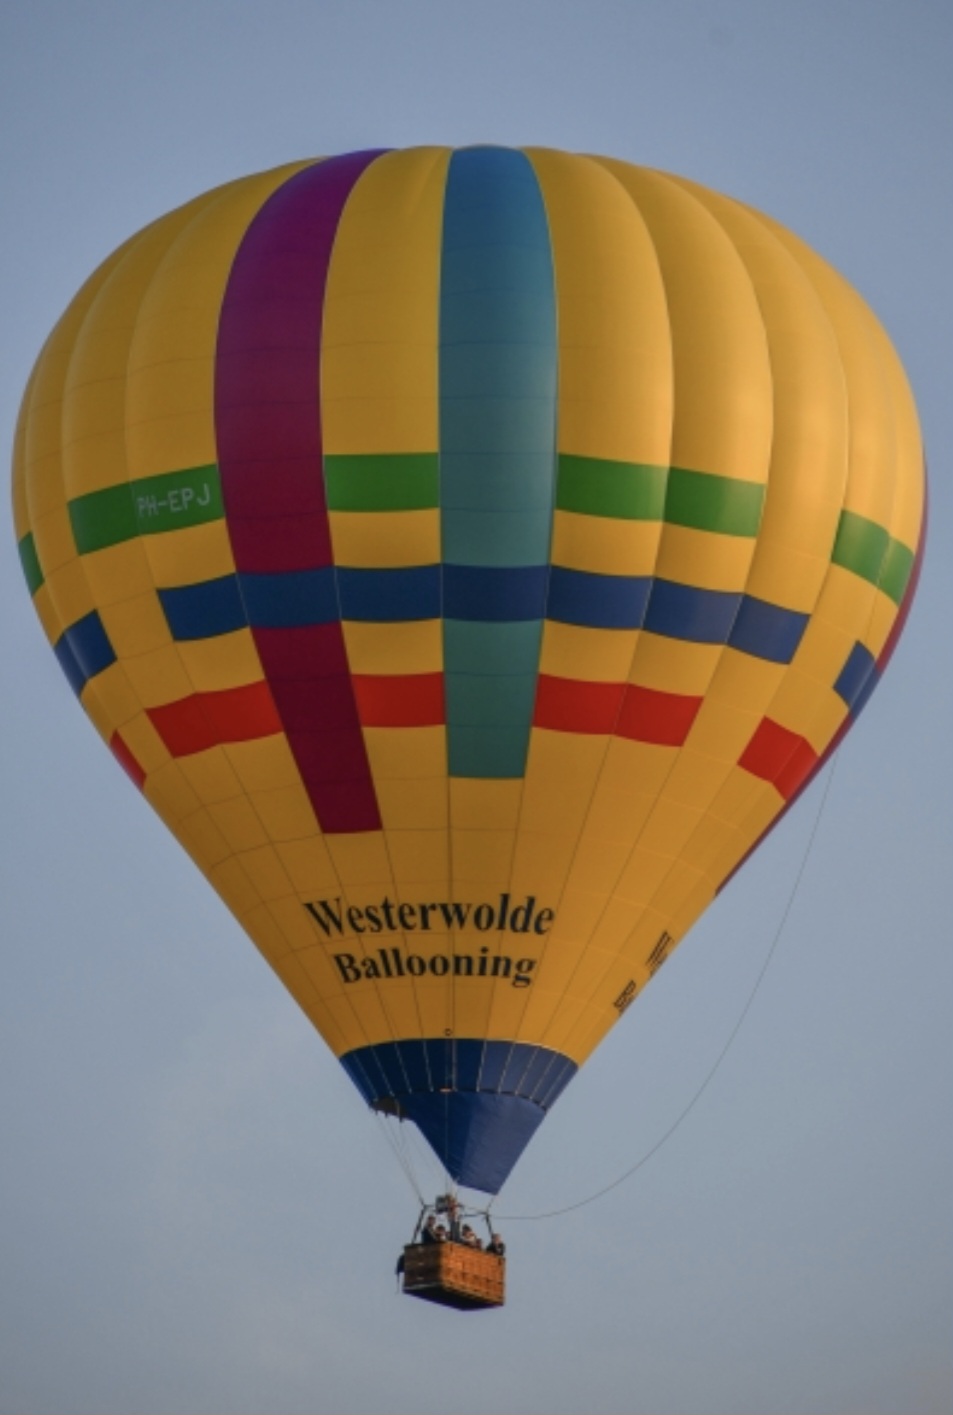 Westerwolde Ballooning - PH-EPJ